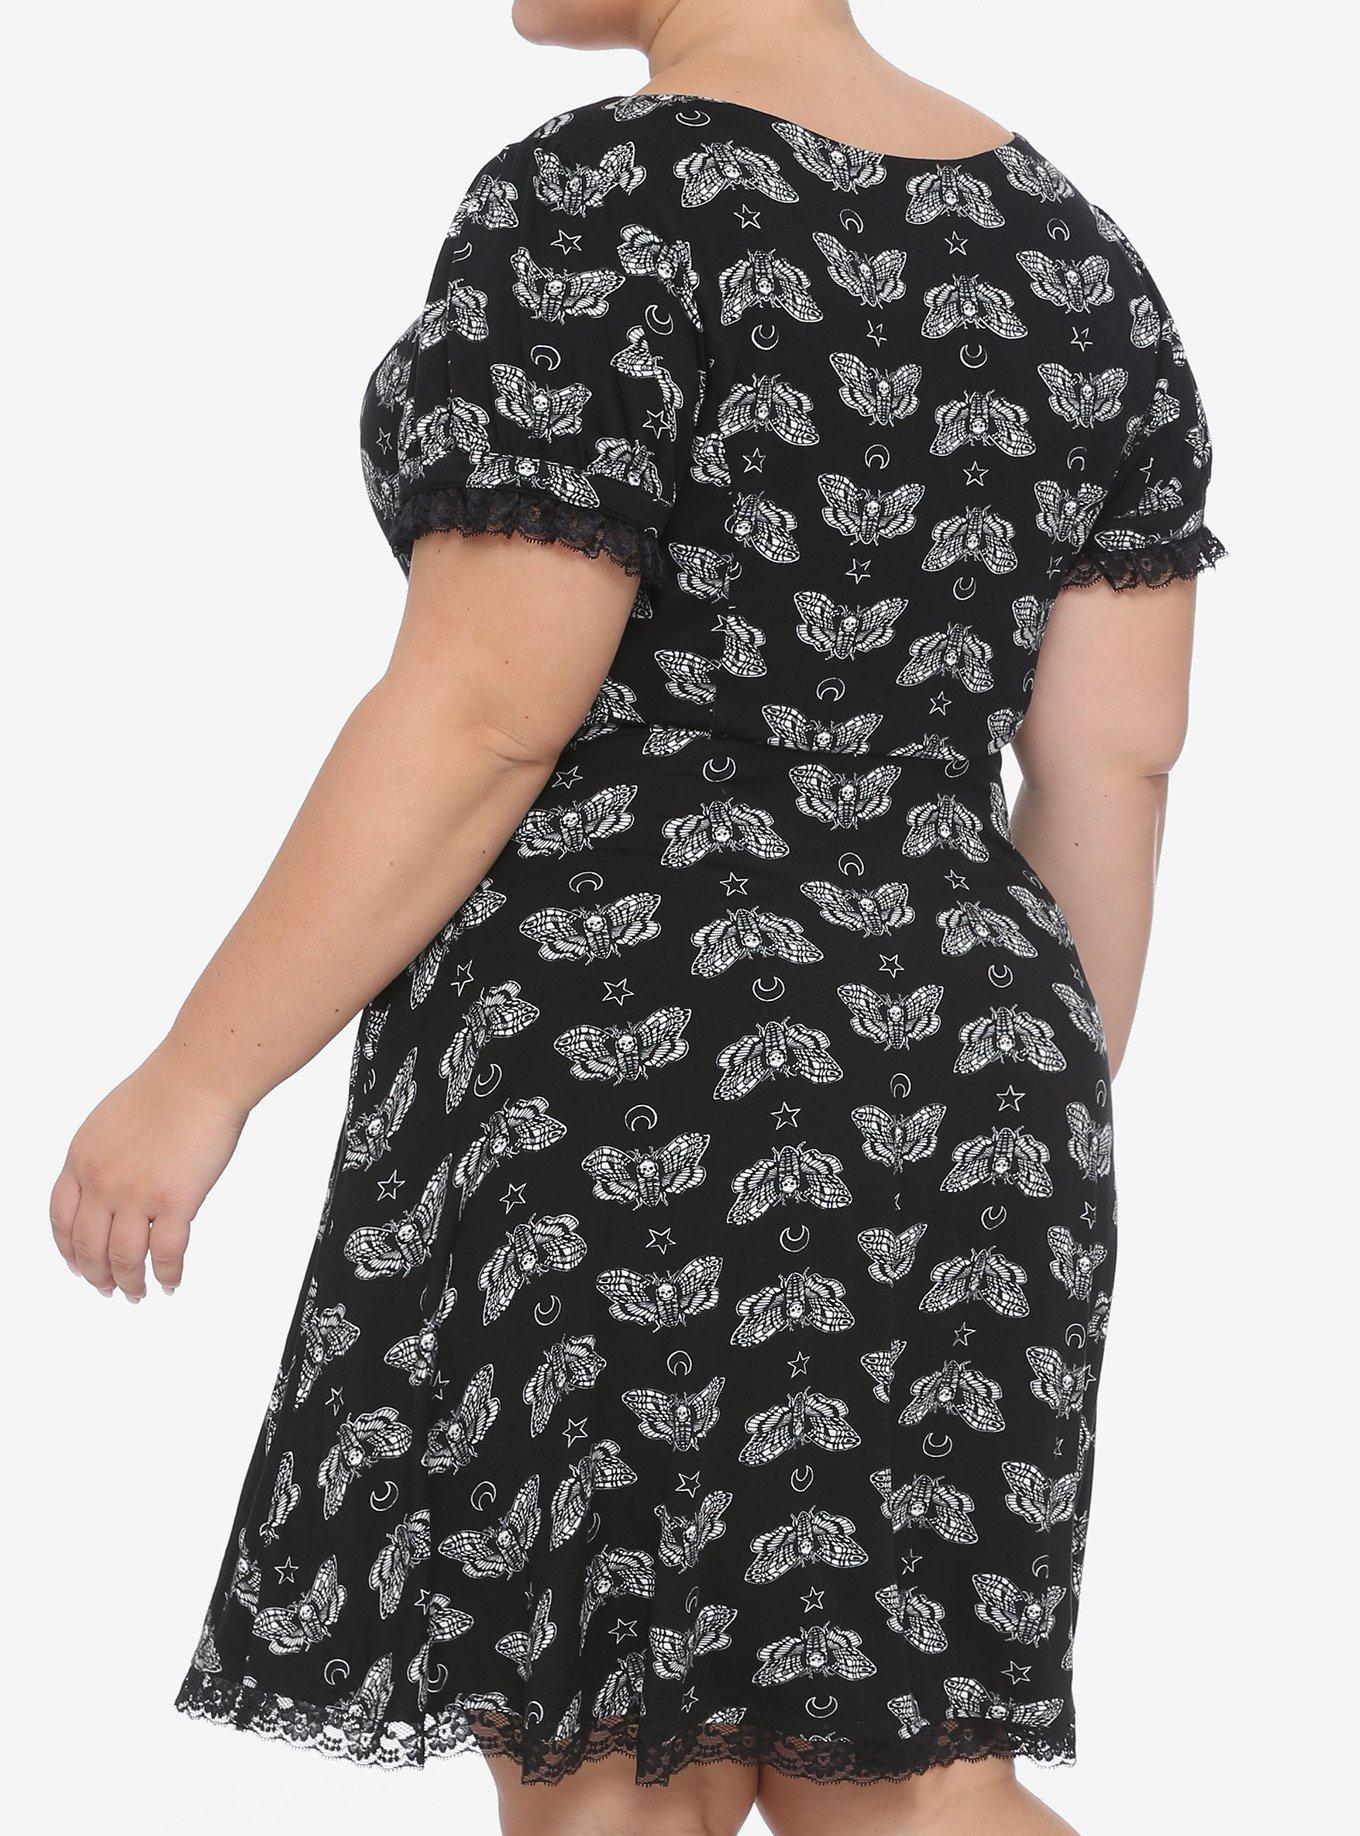 Black & White Moth Print Dress Plus Size, BLACK, alternate